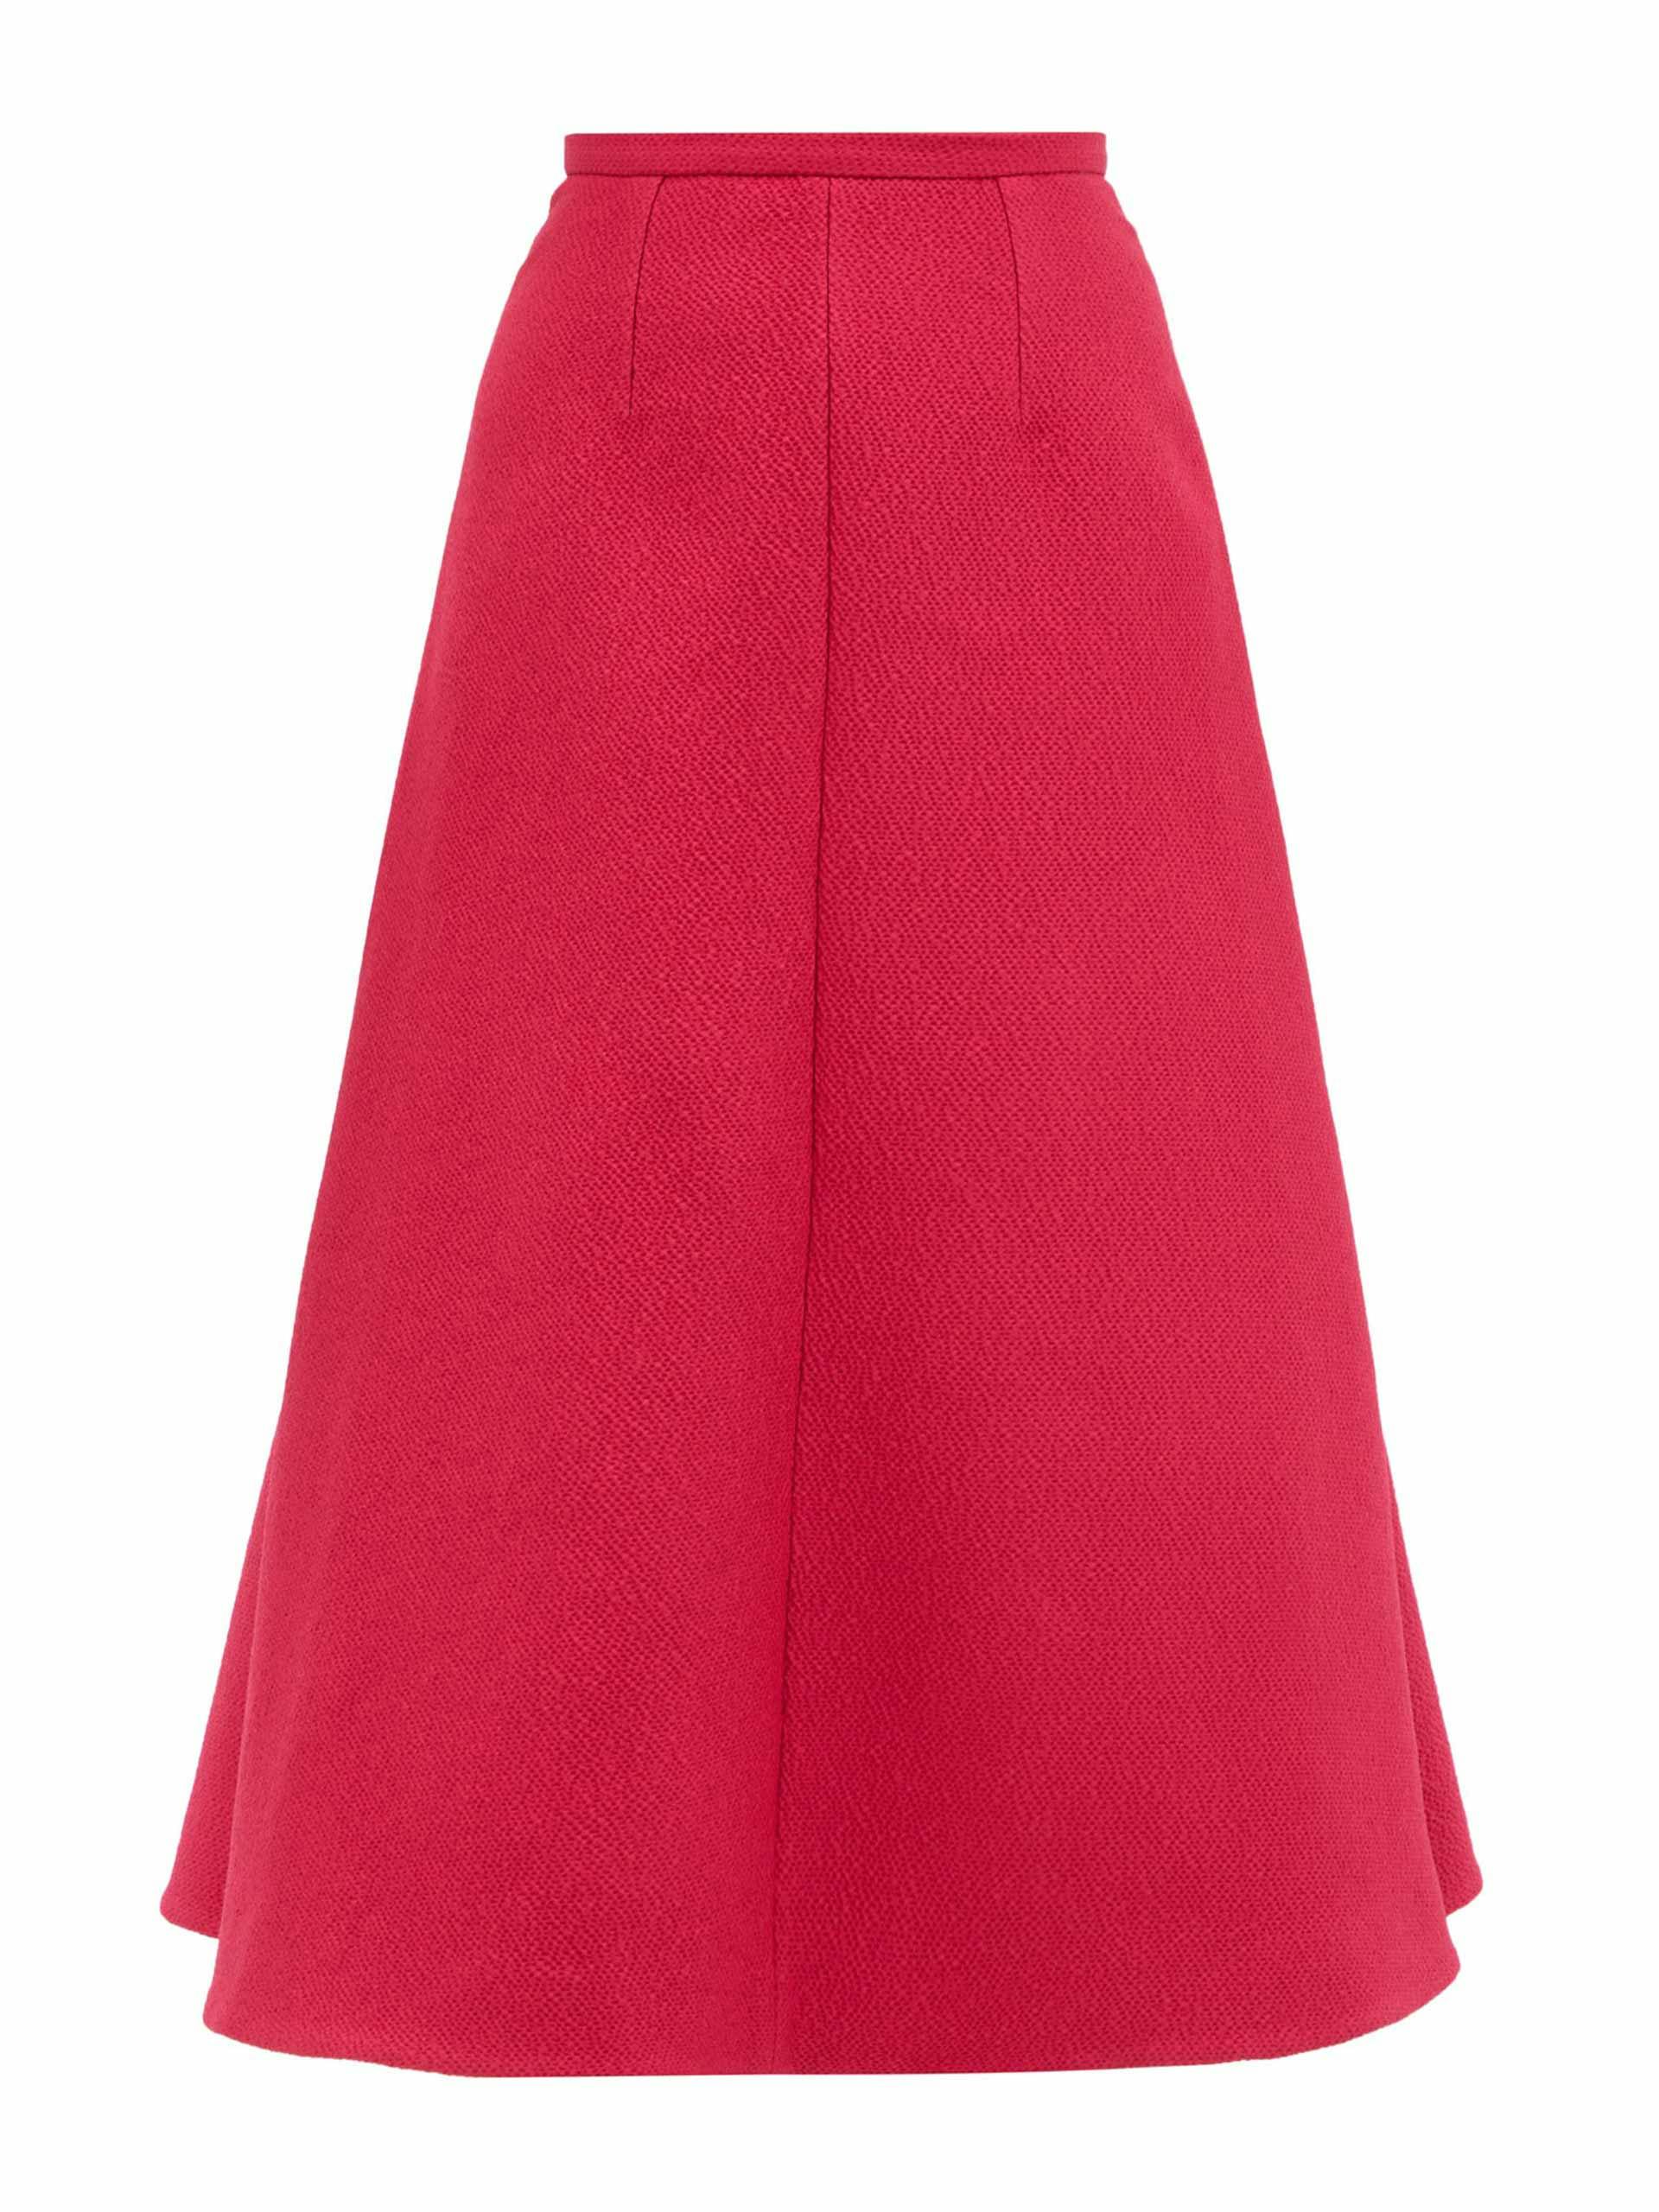 High waisted pink skirt